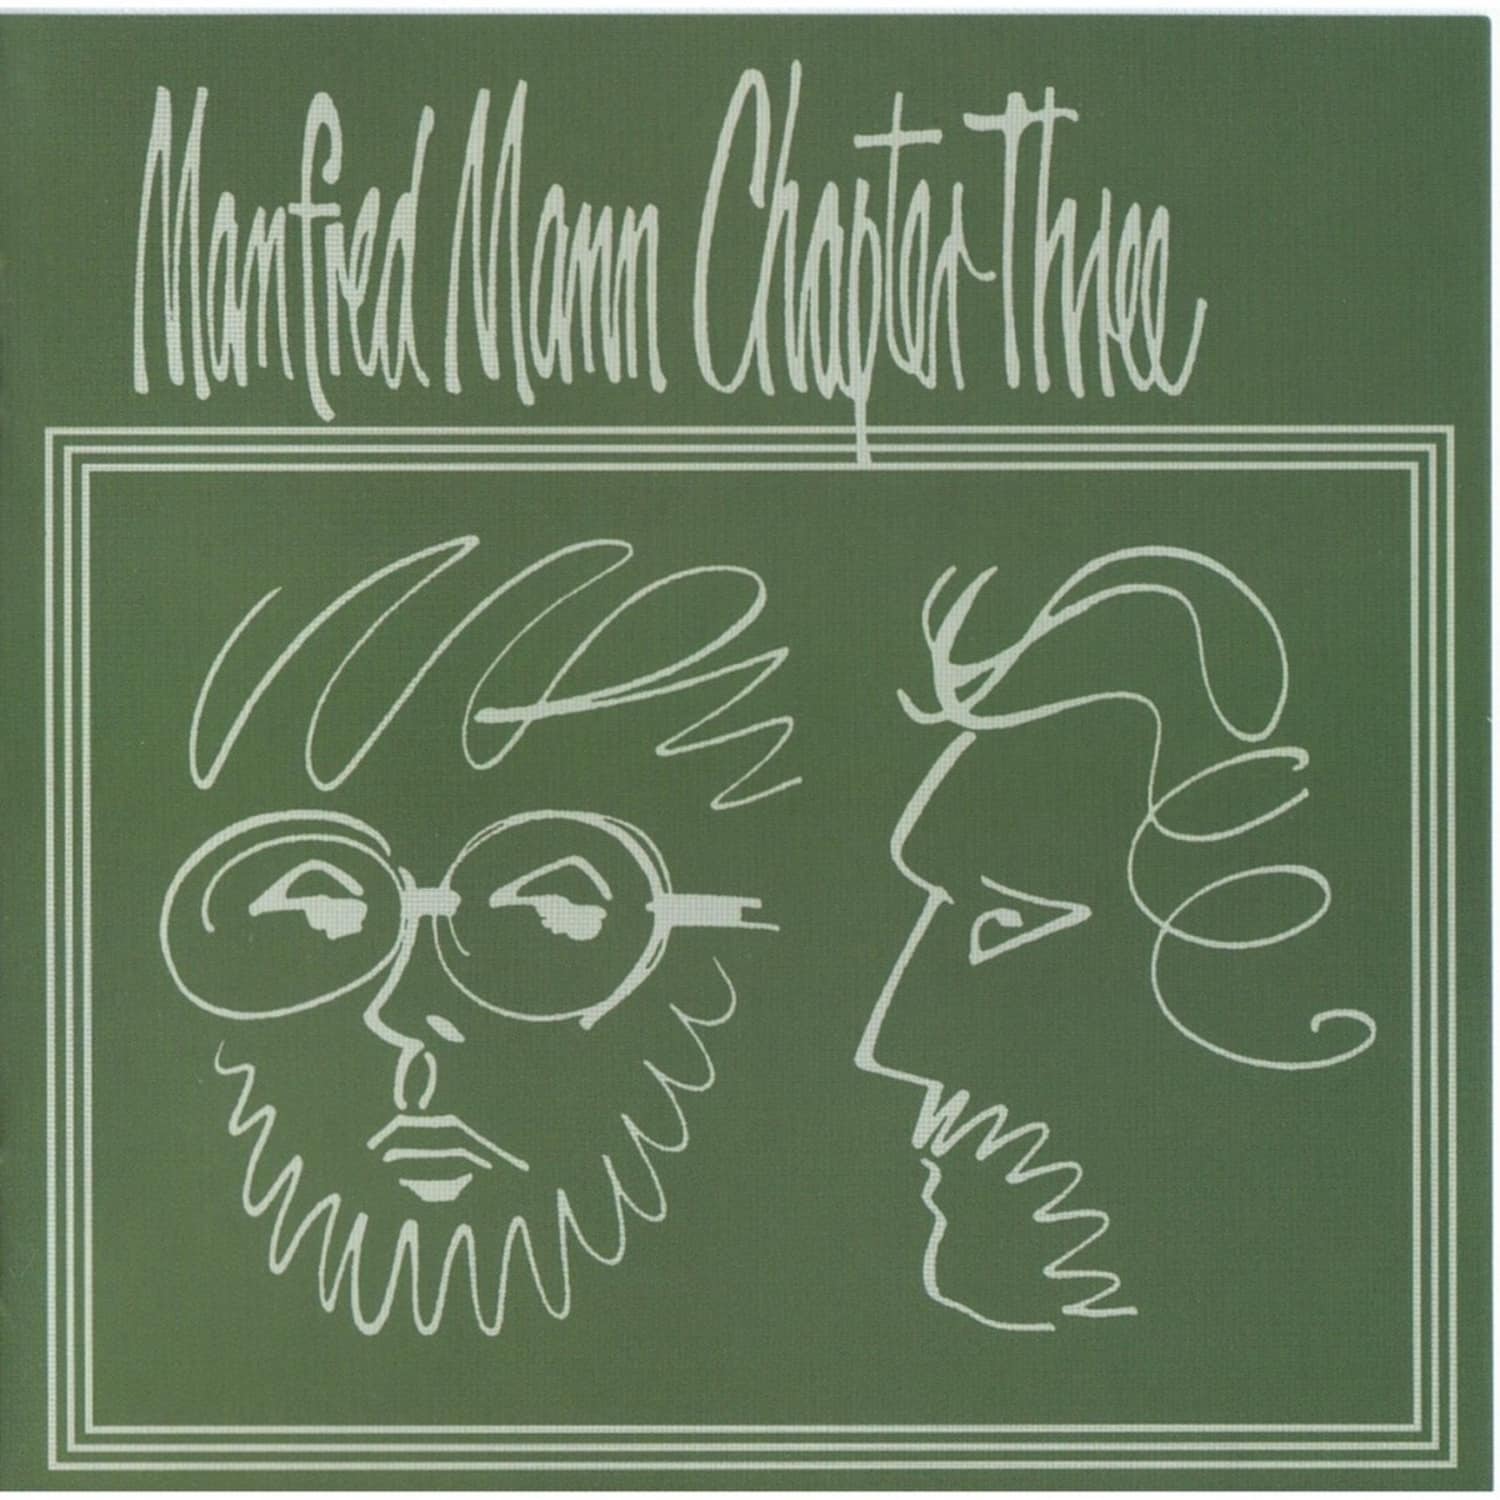 Manfred Mann Chapter Three - VOL.1 